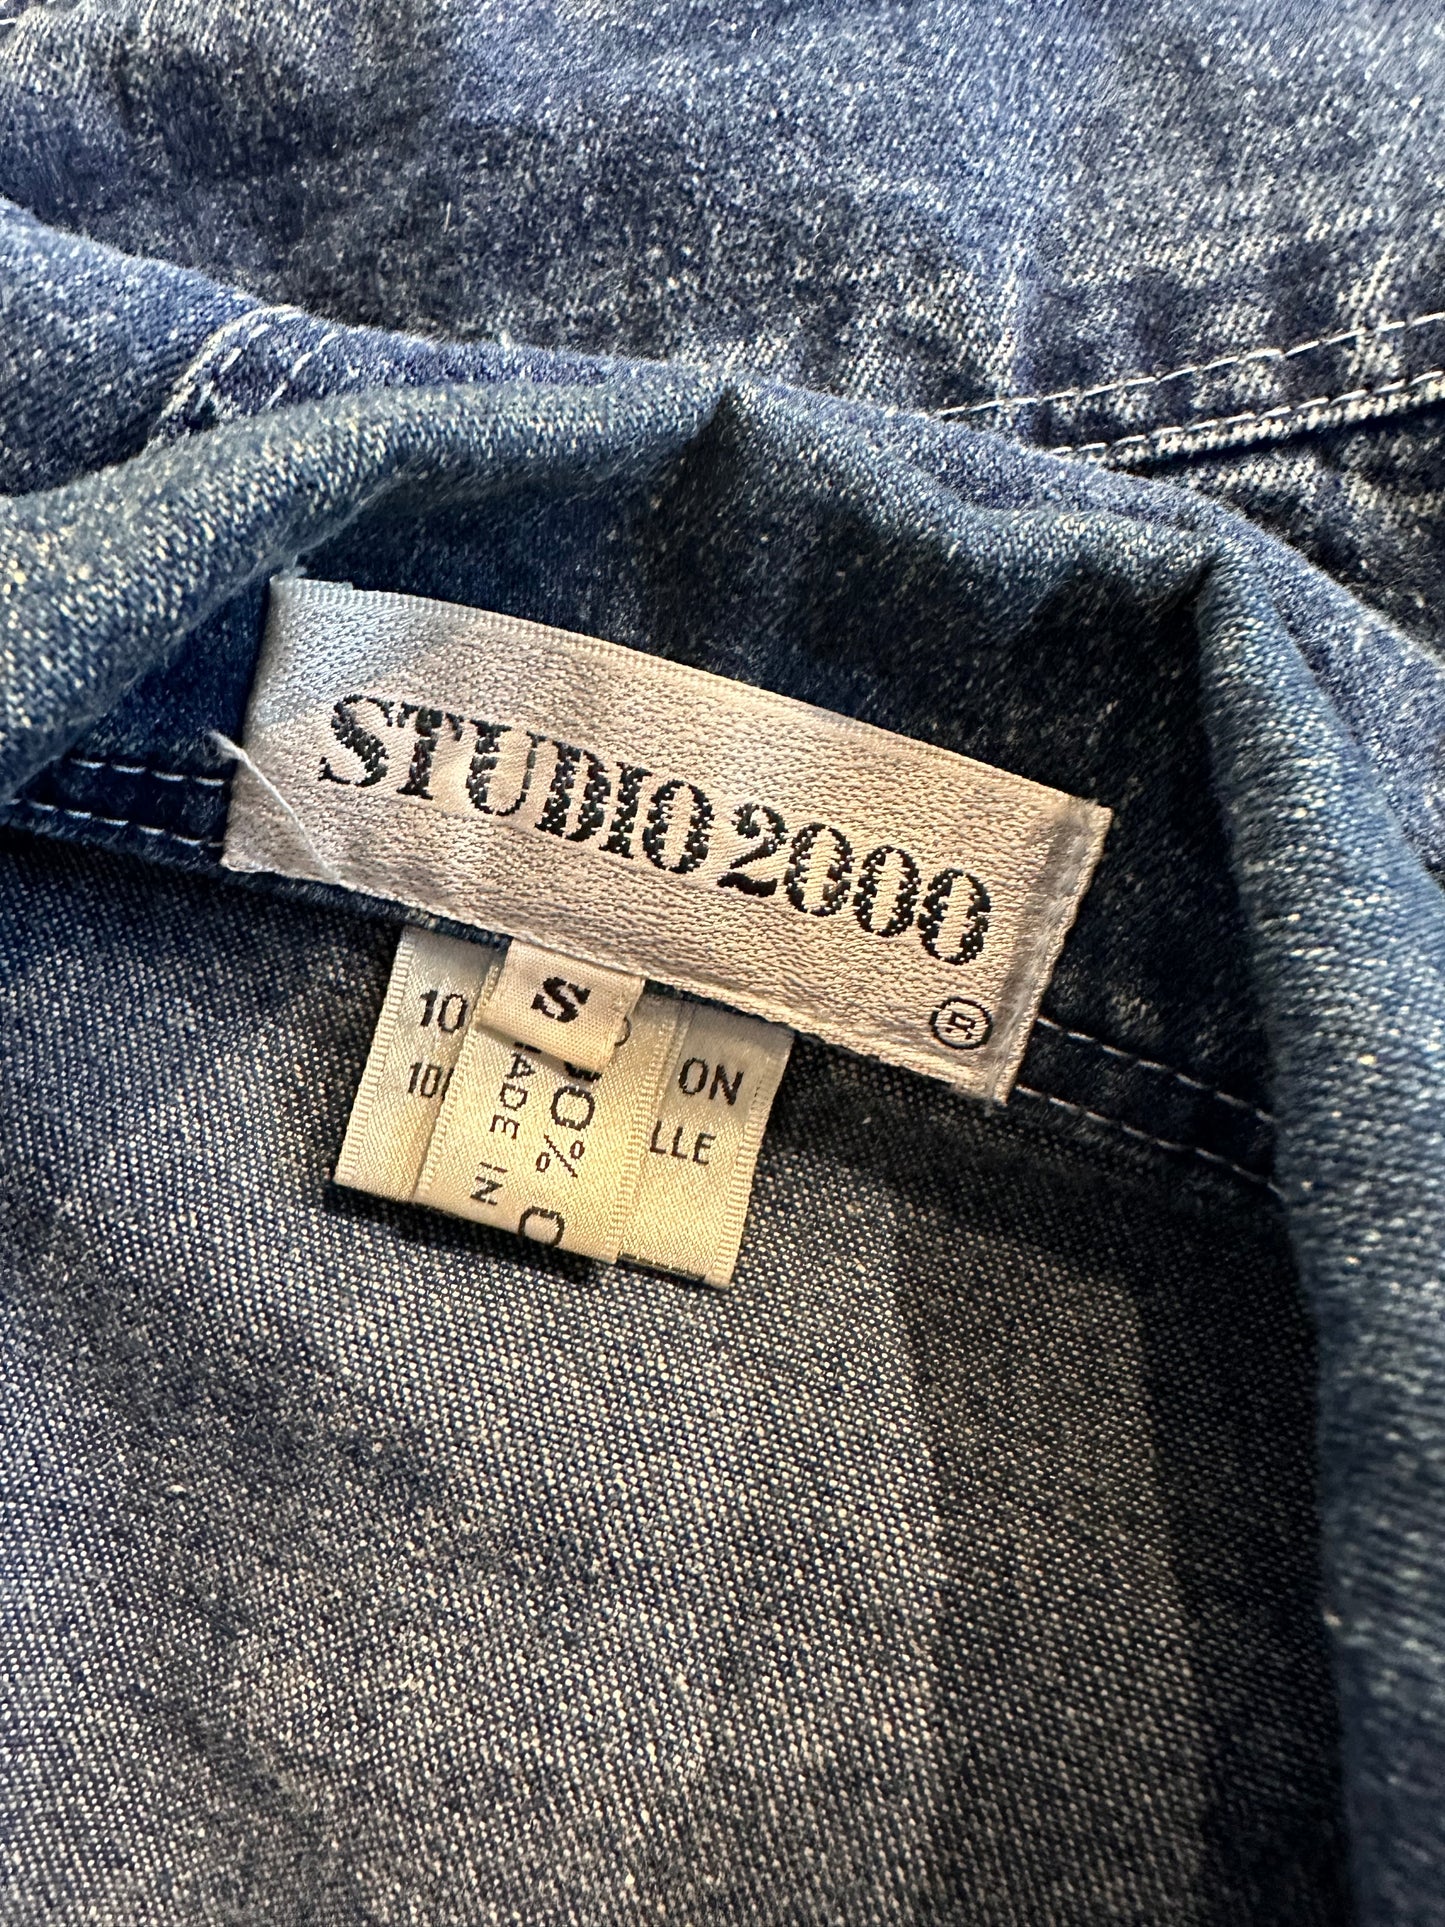 90s 'Studio 2000' Embroidered Denim Jacket / Small